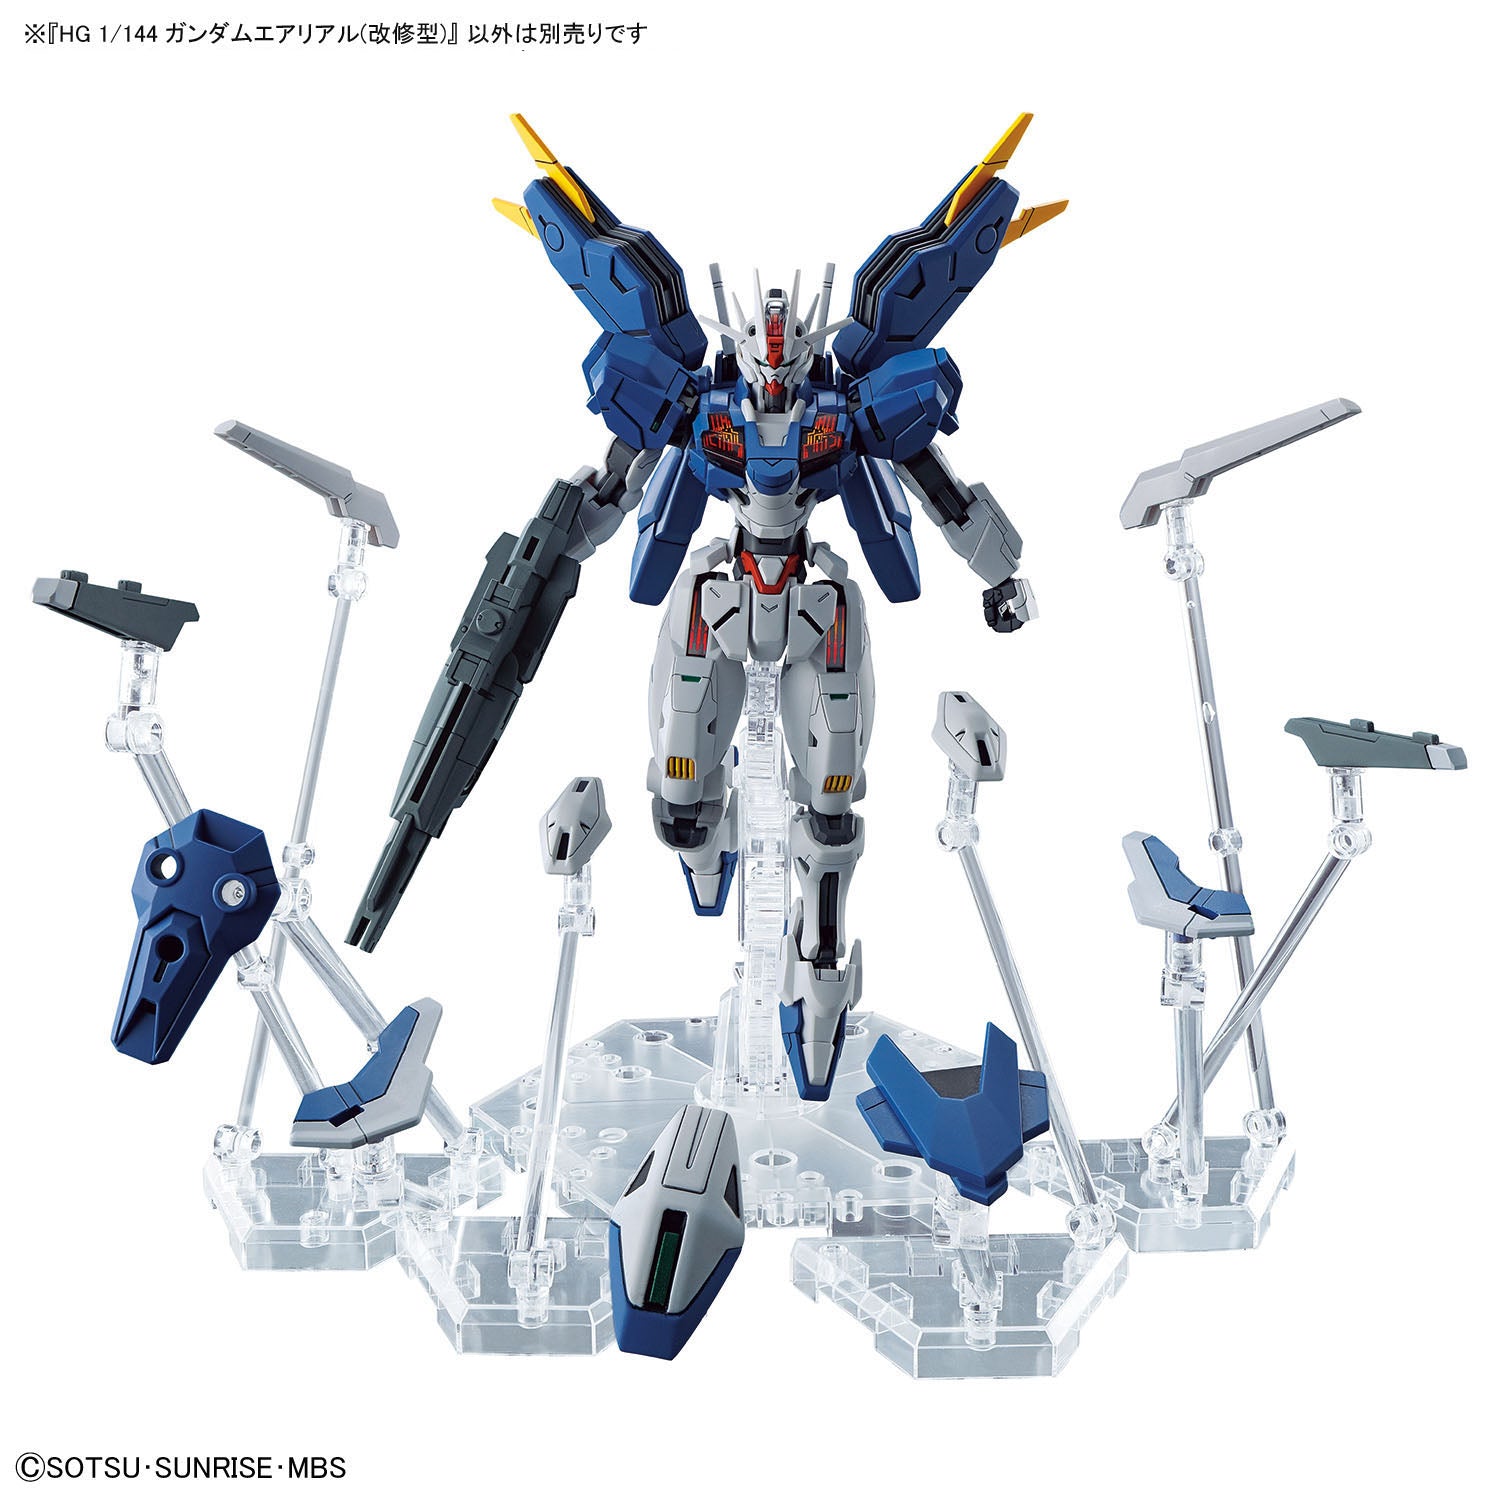 HGTWFM - XVX-016RN Gundam Aerial Rebuild